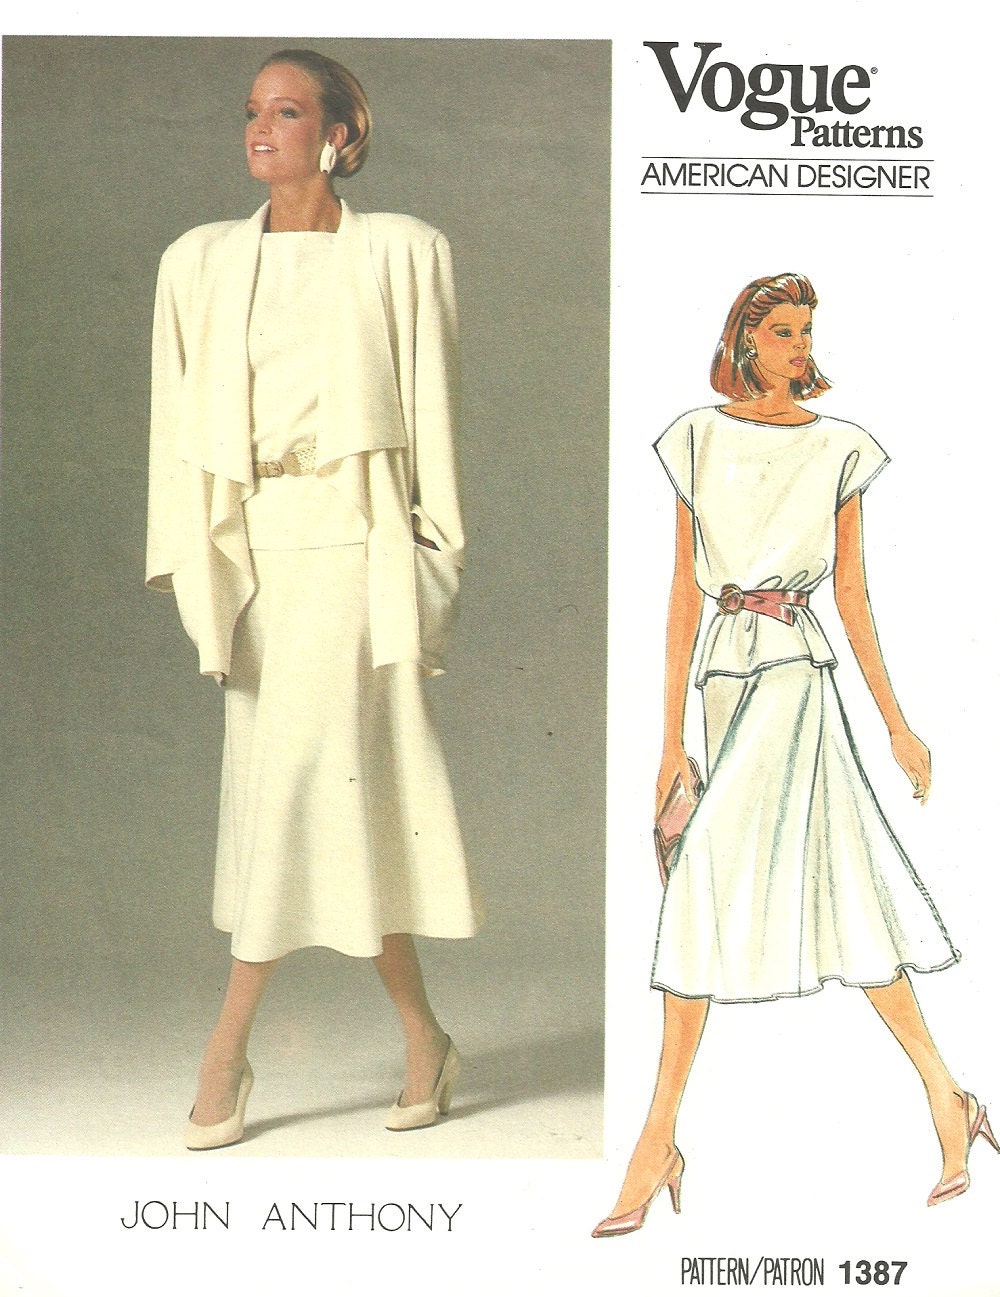 Vogue 1387 / Vintage Designer Sewing Pattern By John Anthony